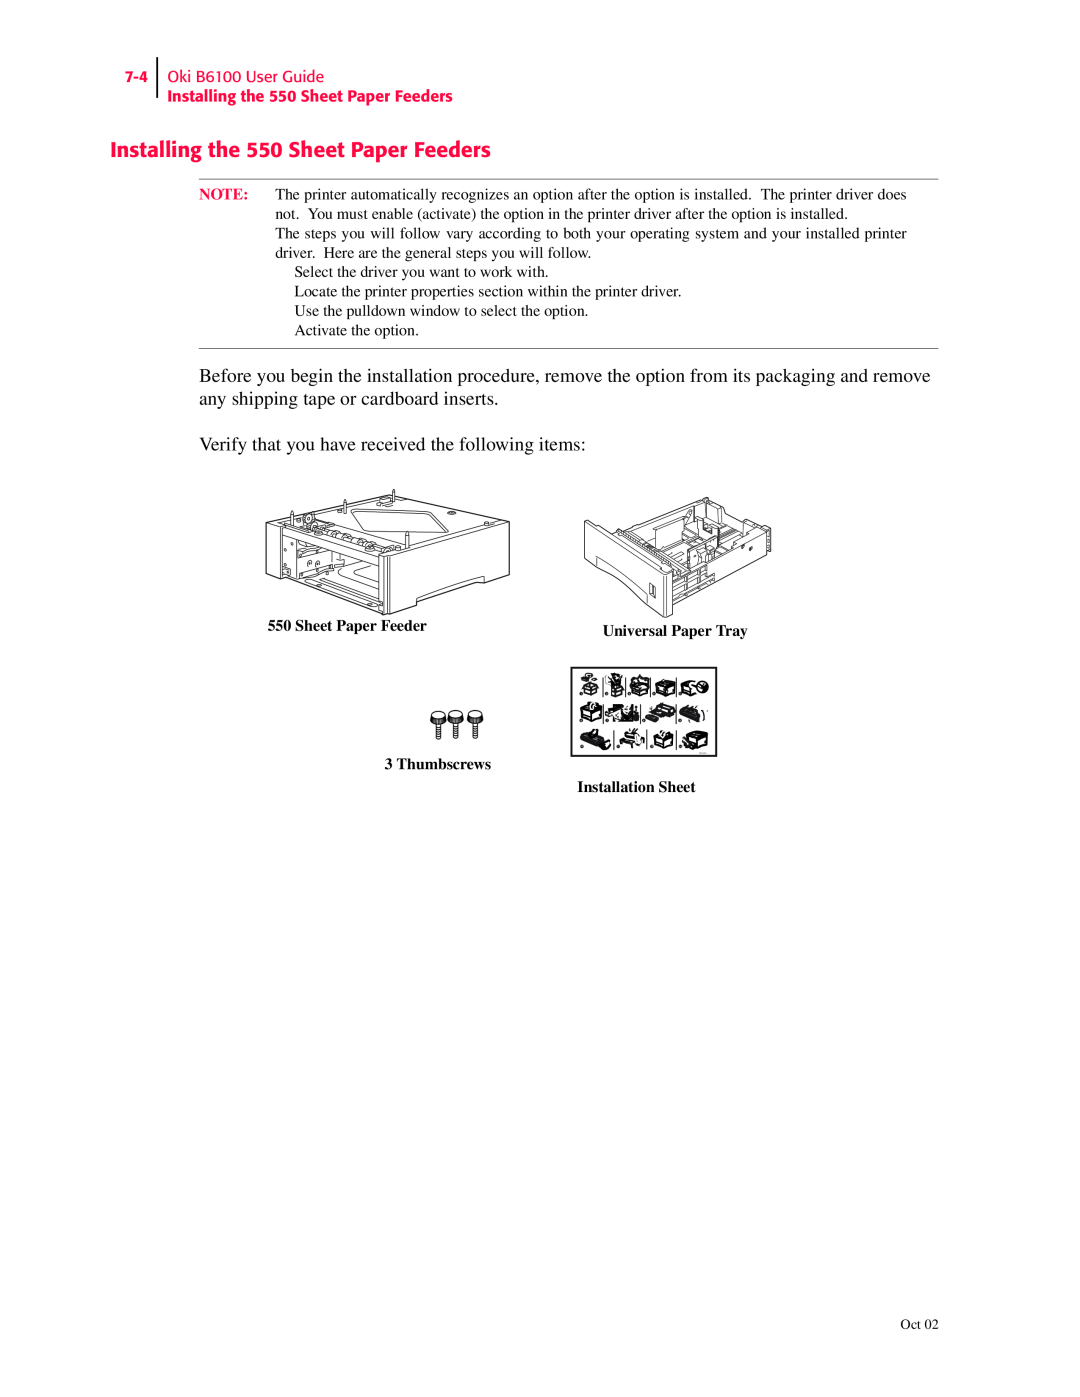 Oki manual Oki B6100 User Guide Installing the 550 Sheet Paper Feeders, Sheet Paper Feeder 3 Thumbscrews 